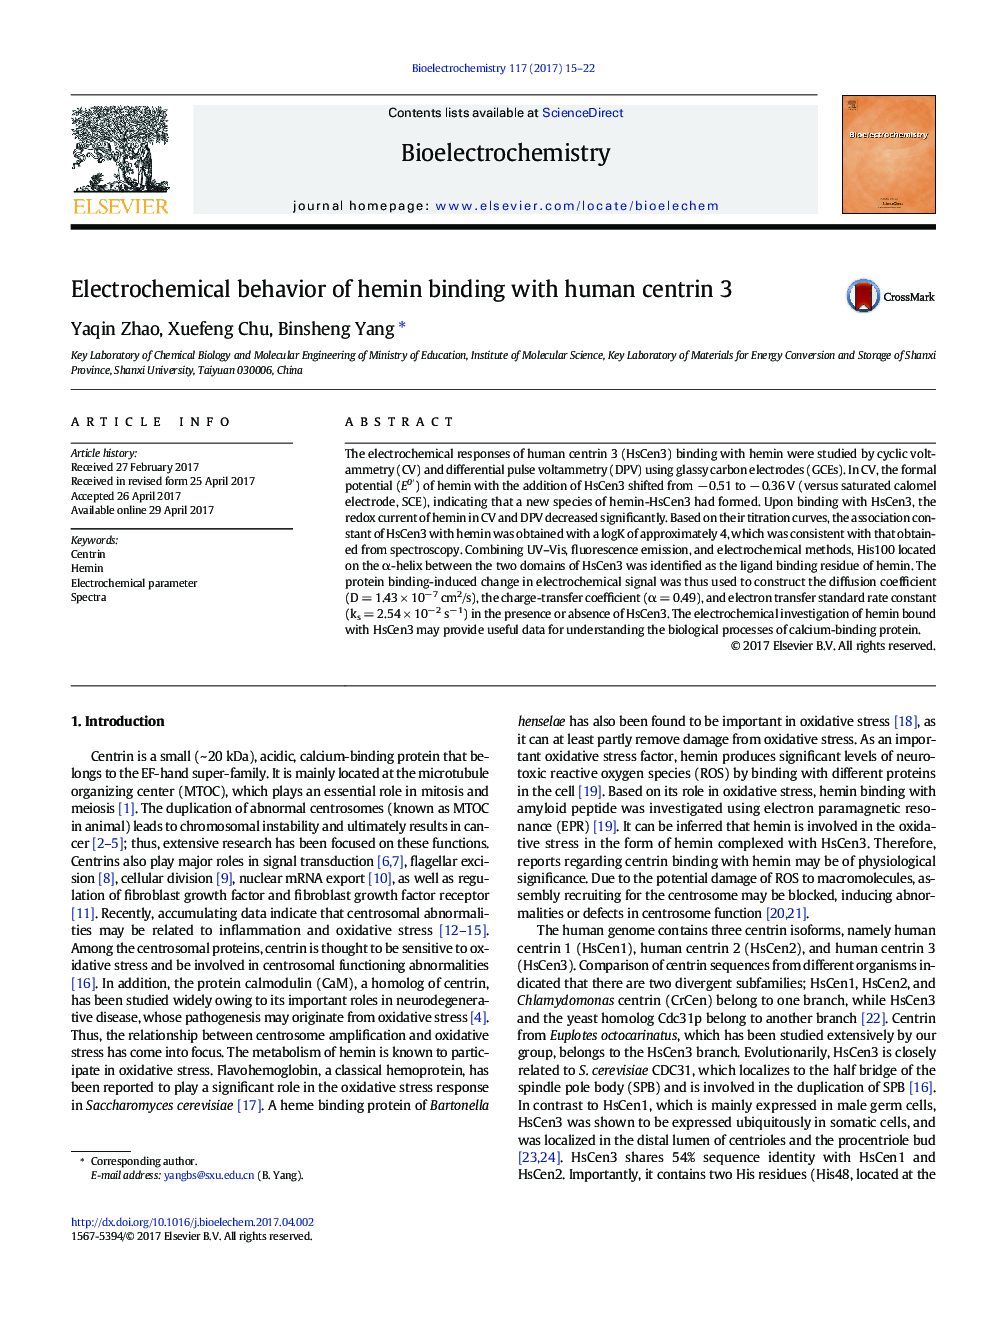 Electrochemical behavior of hemin binding with human centrin 3